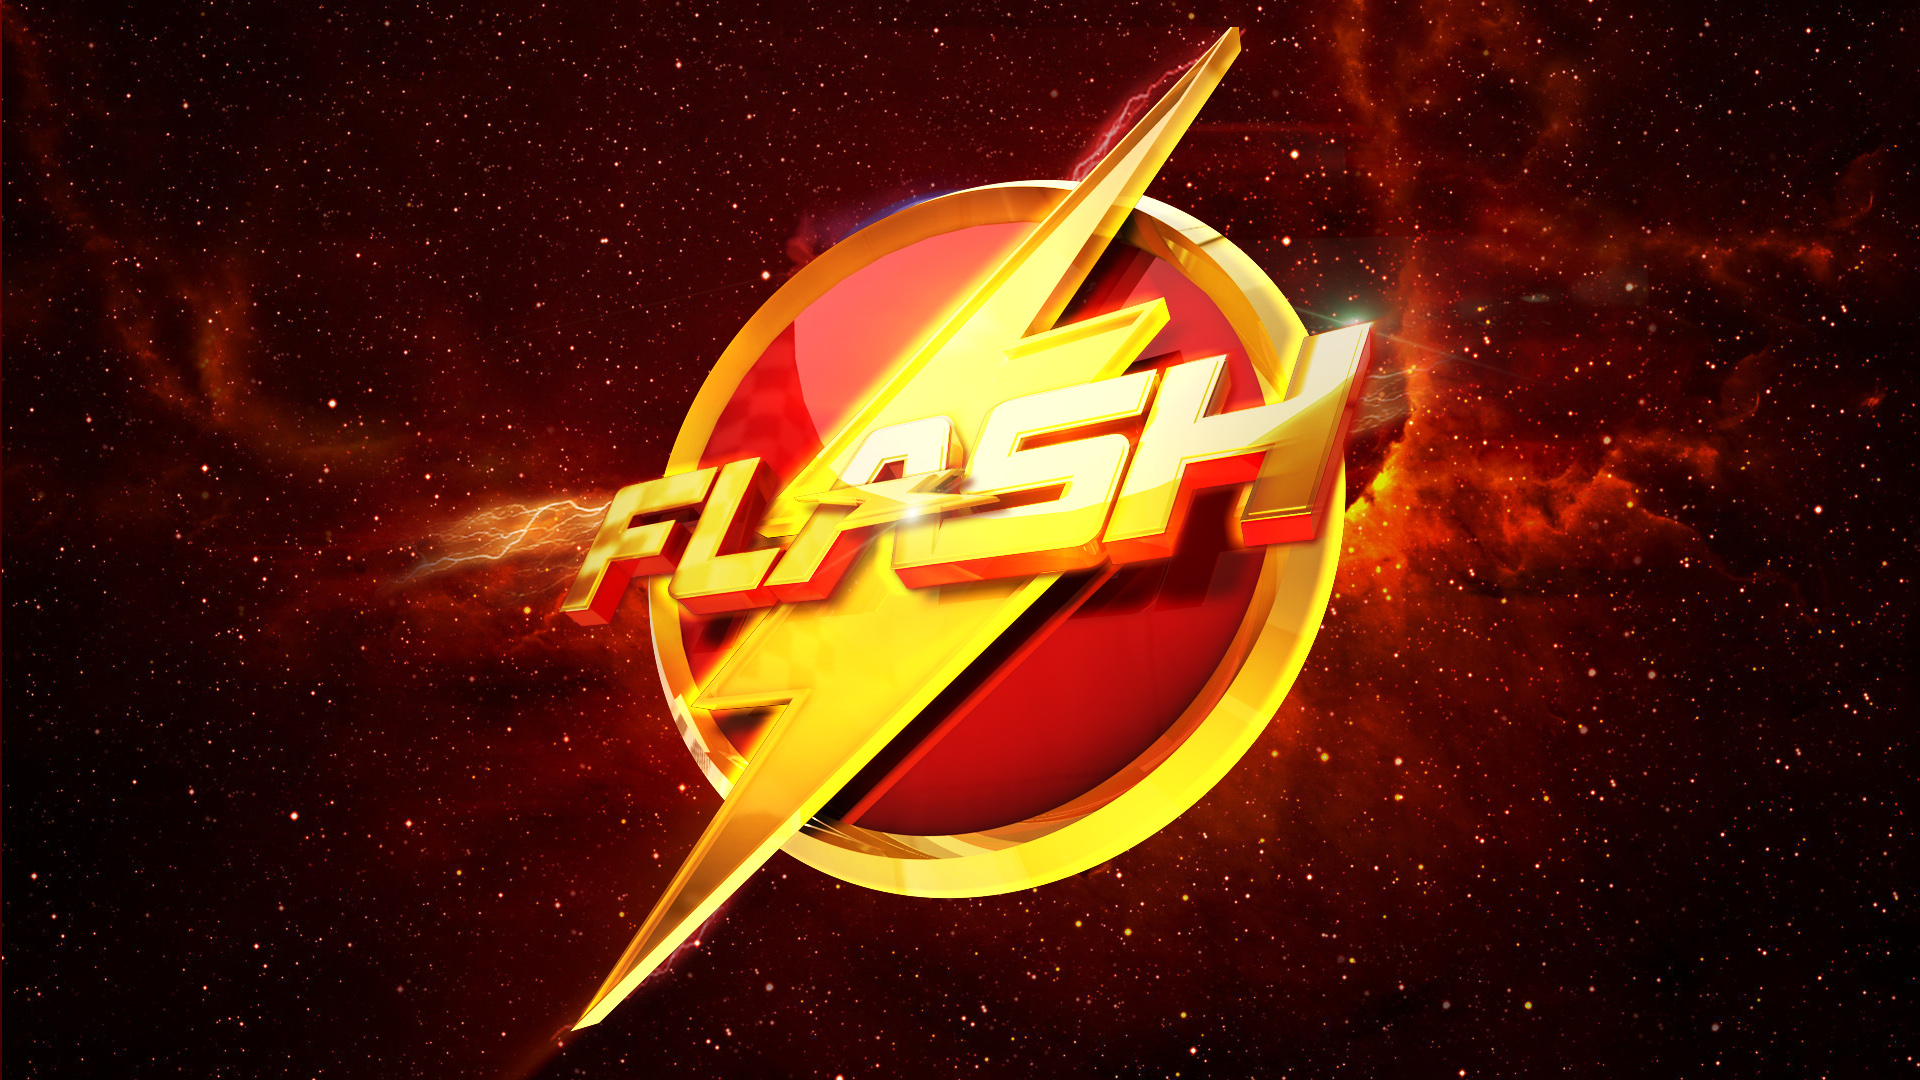 The Flash Cw Wallpaper By Alex4everdn Watch Fan Art Movies